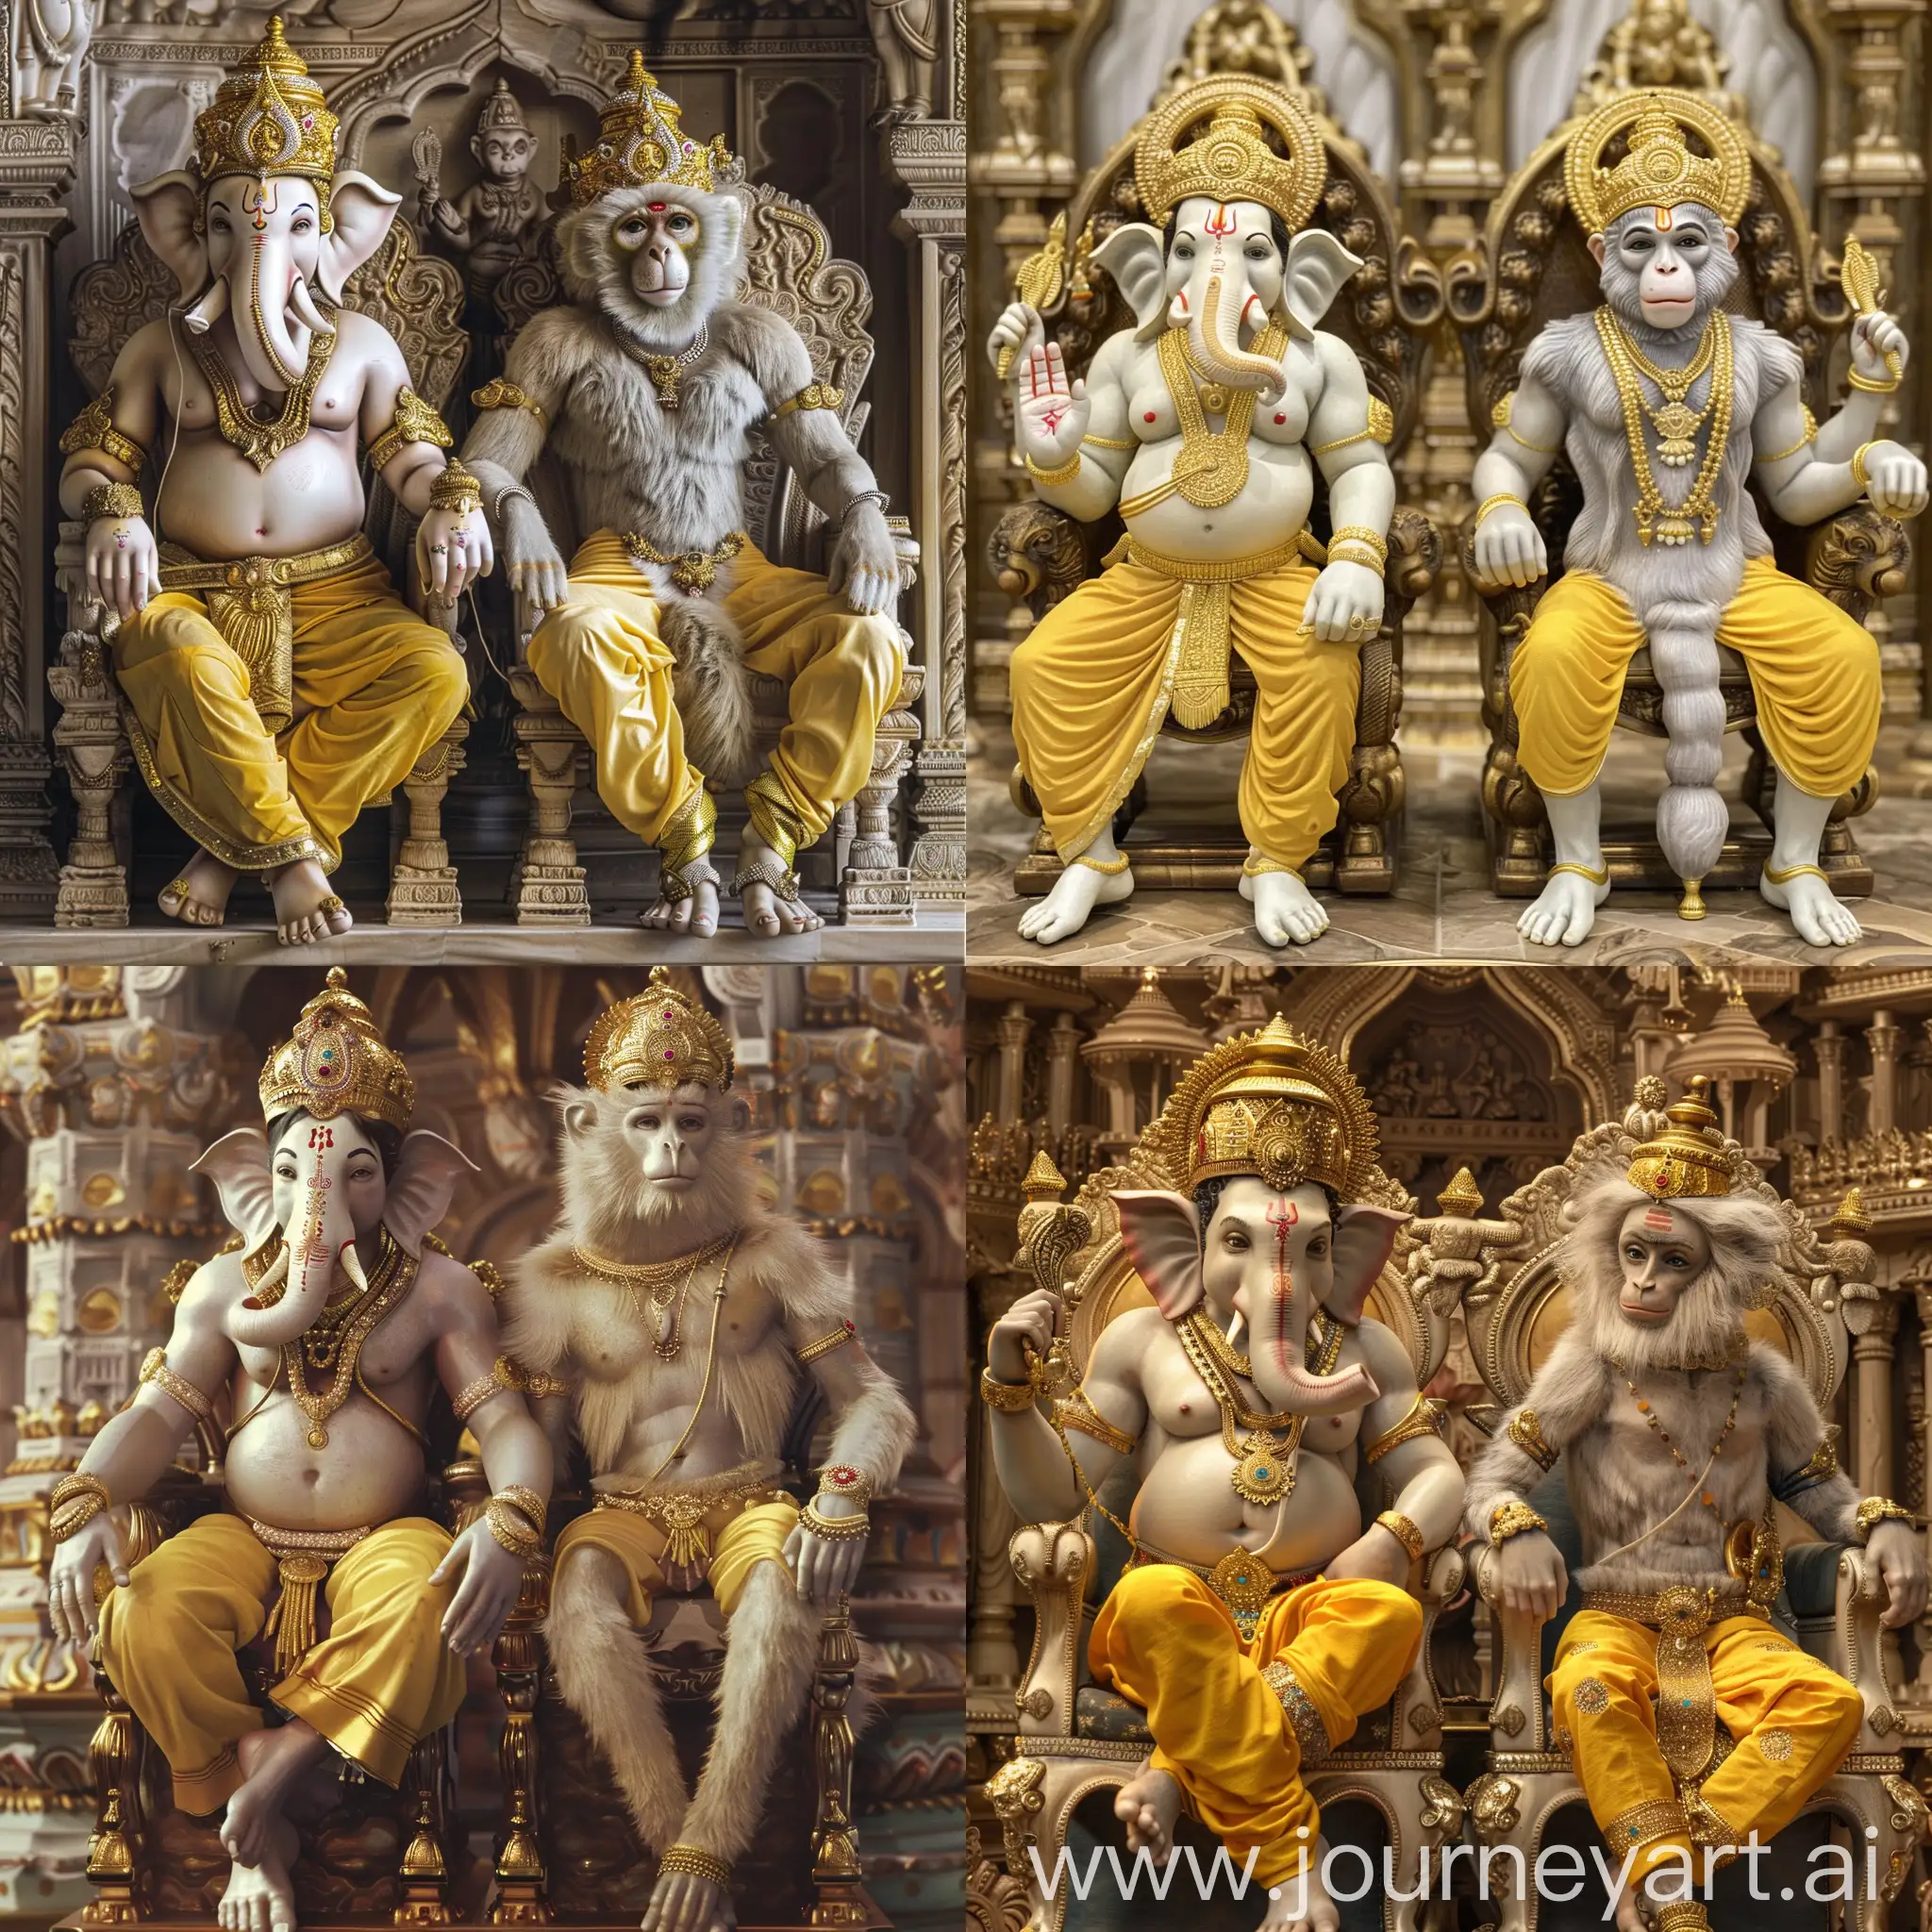 Hindu-Deities-Ganesha-and-Hanuman-on-Imperial-Thrones-in-a-Temple